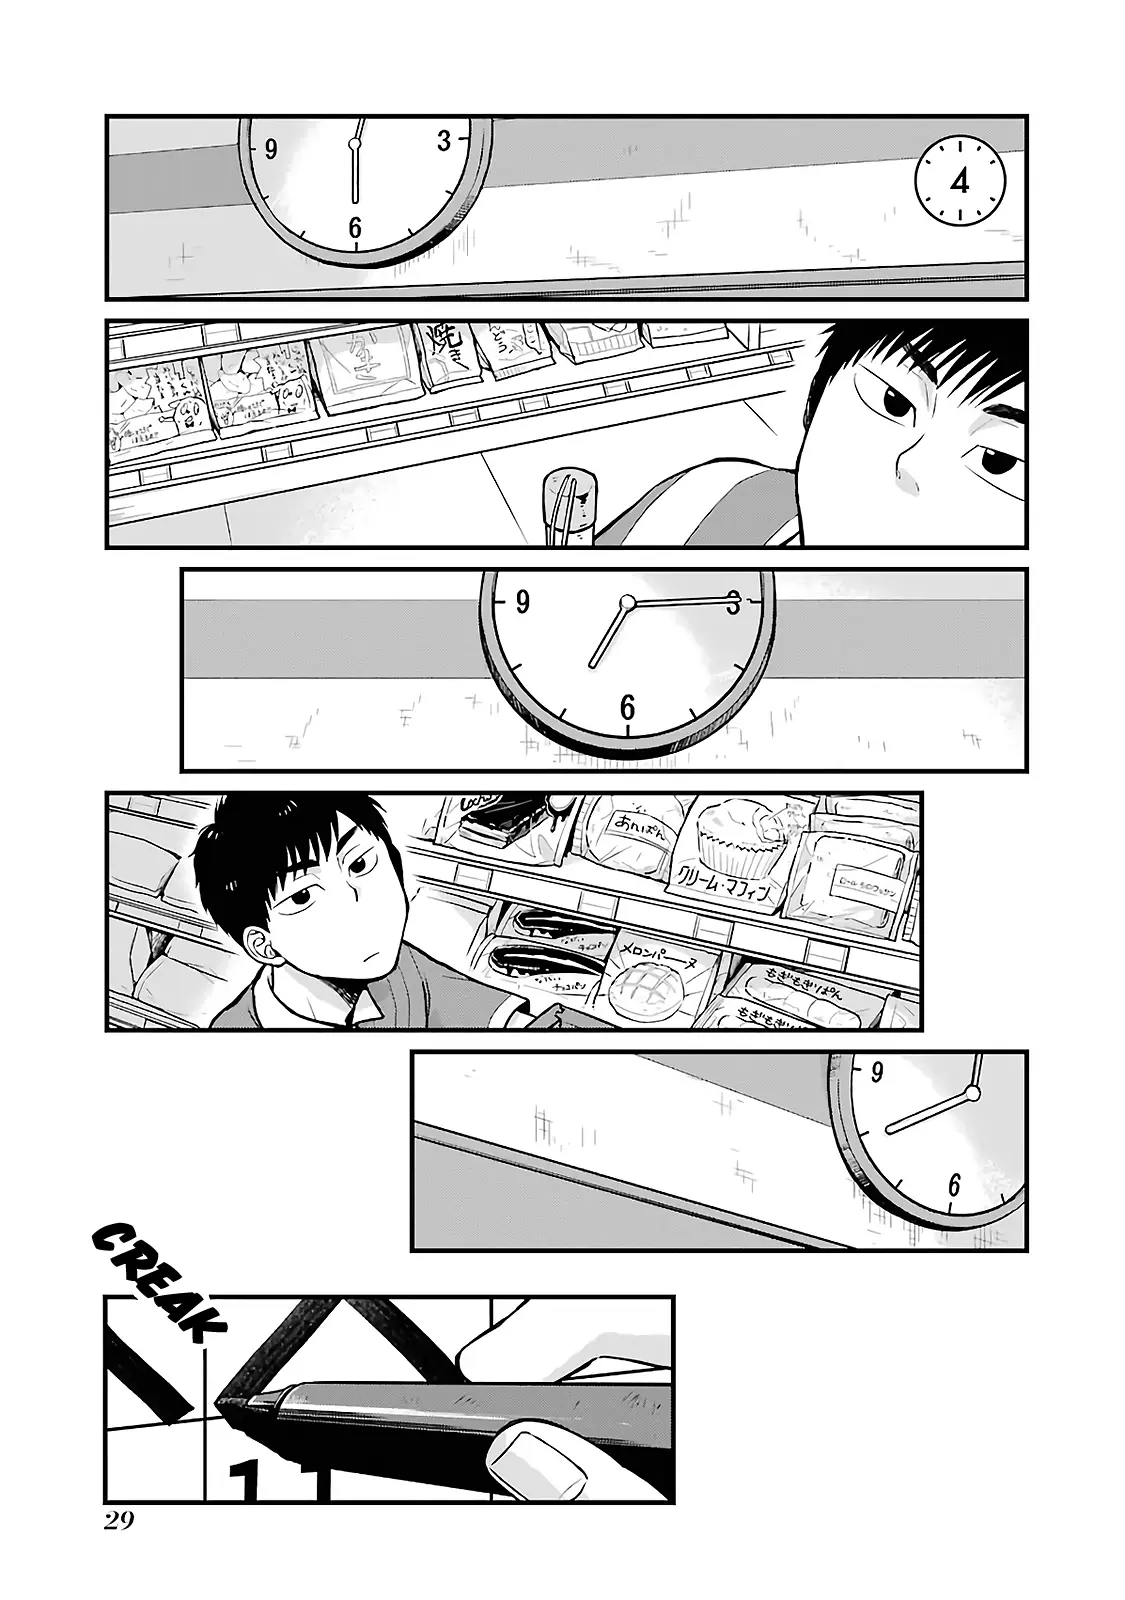 Combini De Kimi To No 5 Fun Kan - 4 page 1